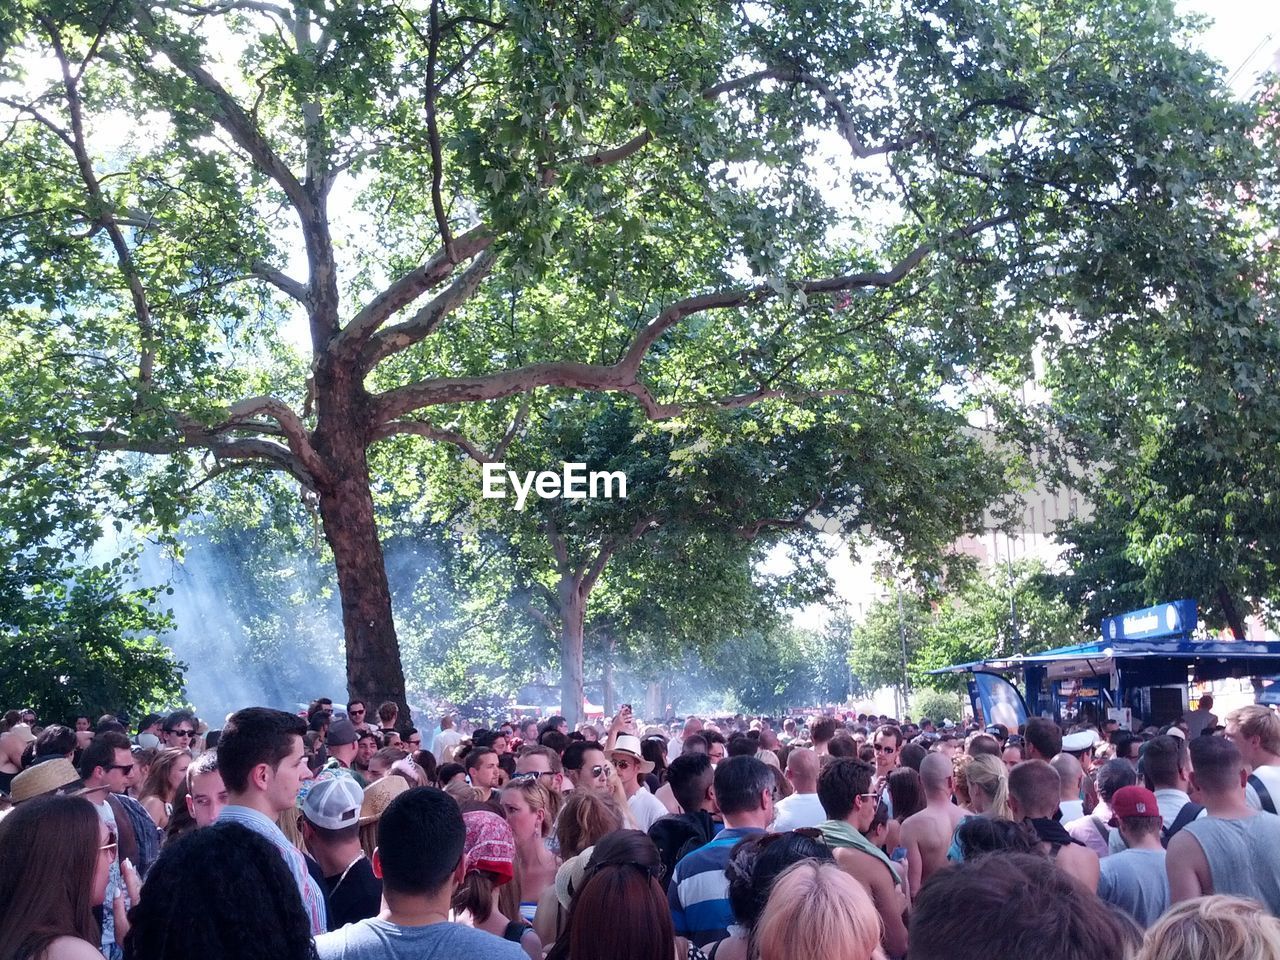 Crowd of people below tree canopy